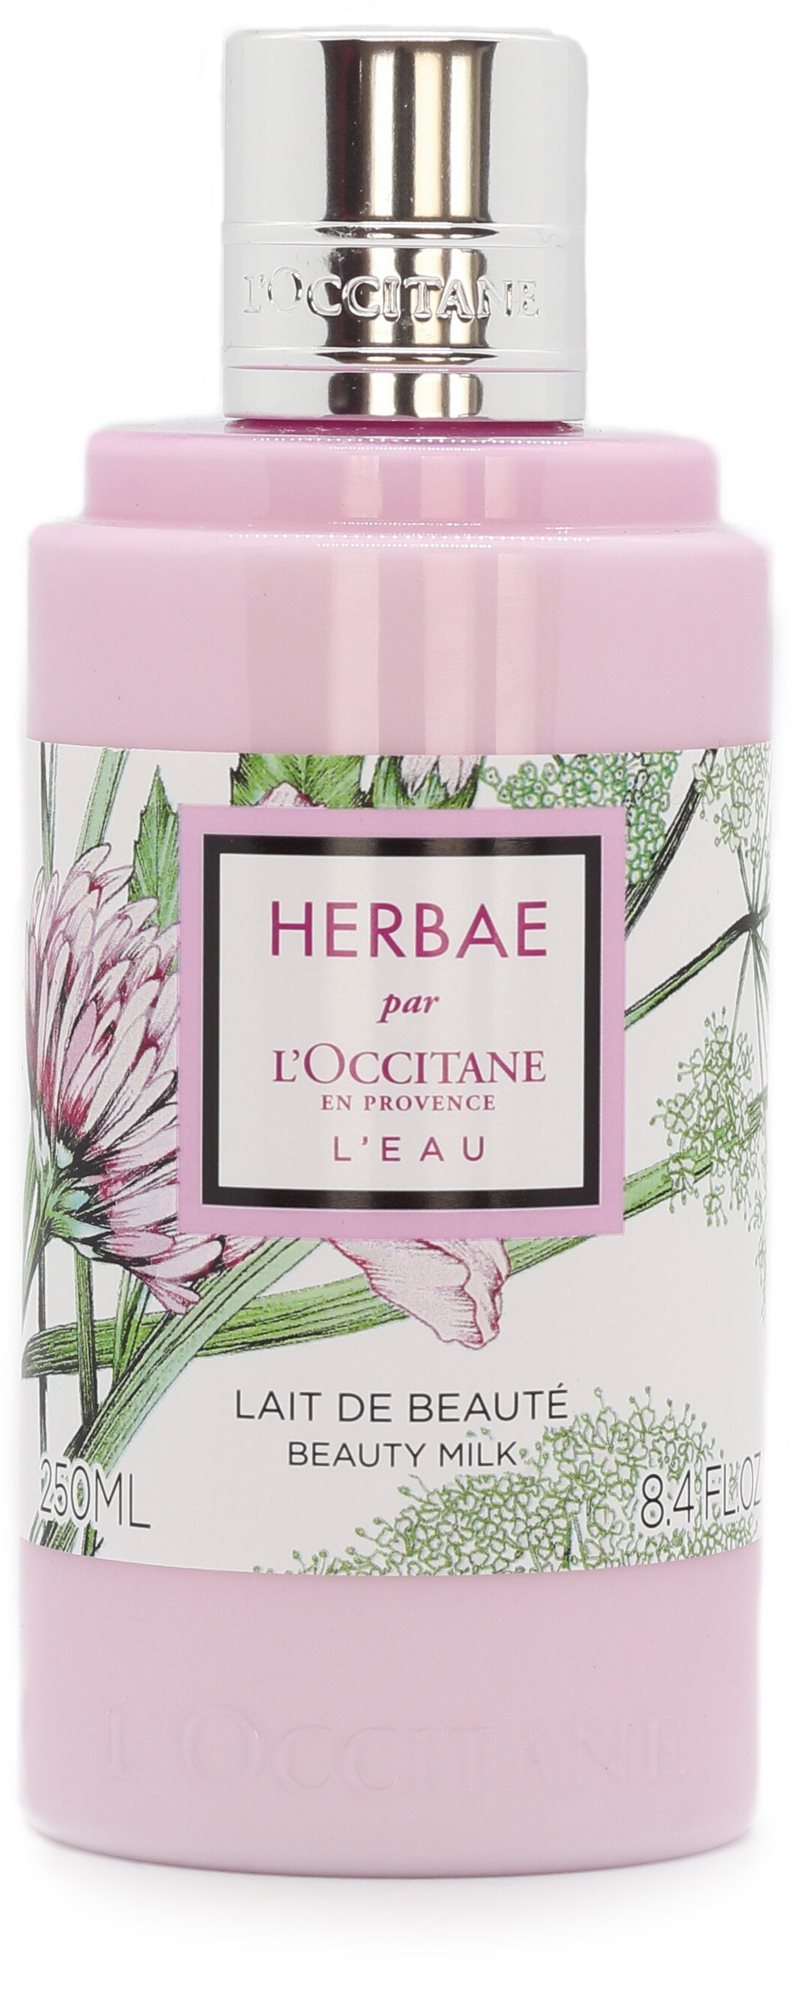 L'OCCITANE Herbae L'Eau Beauty Milk 250 ml